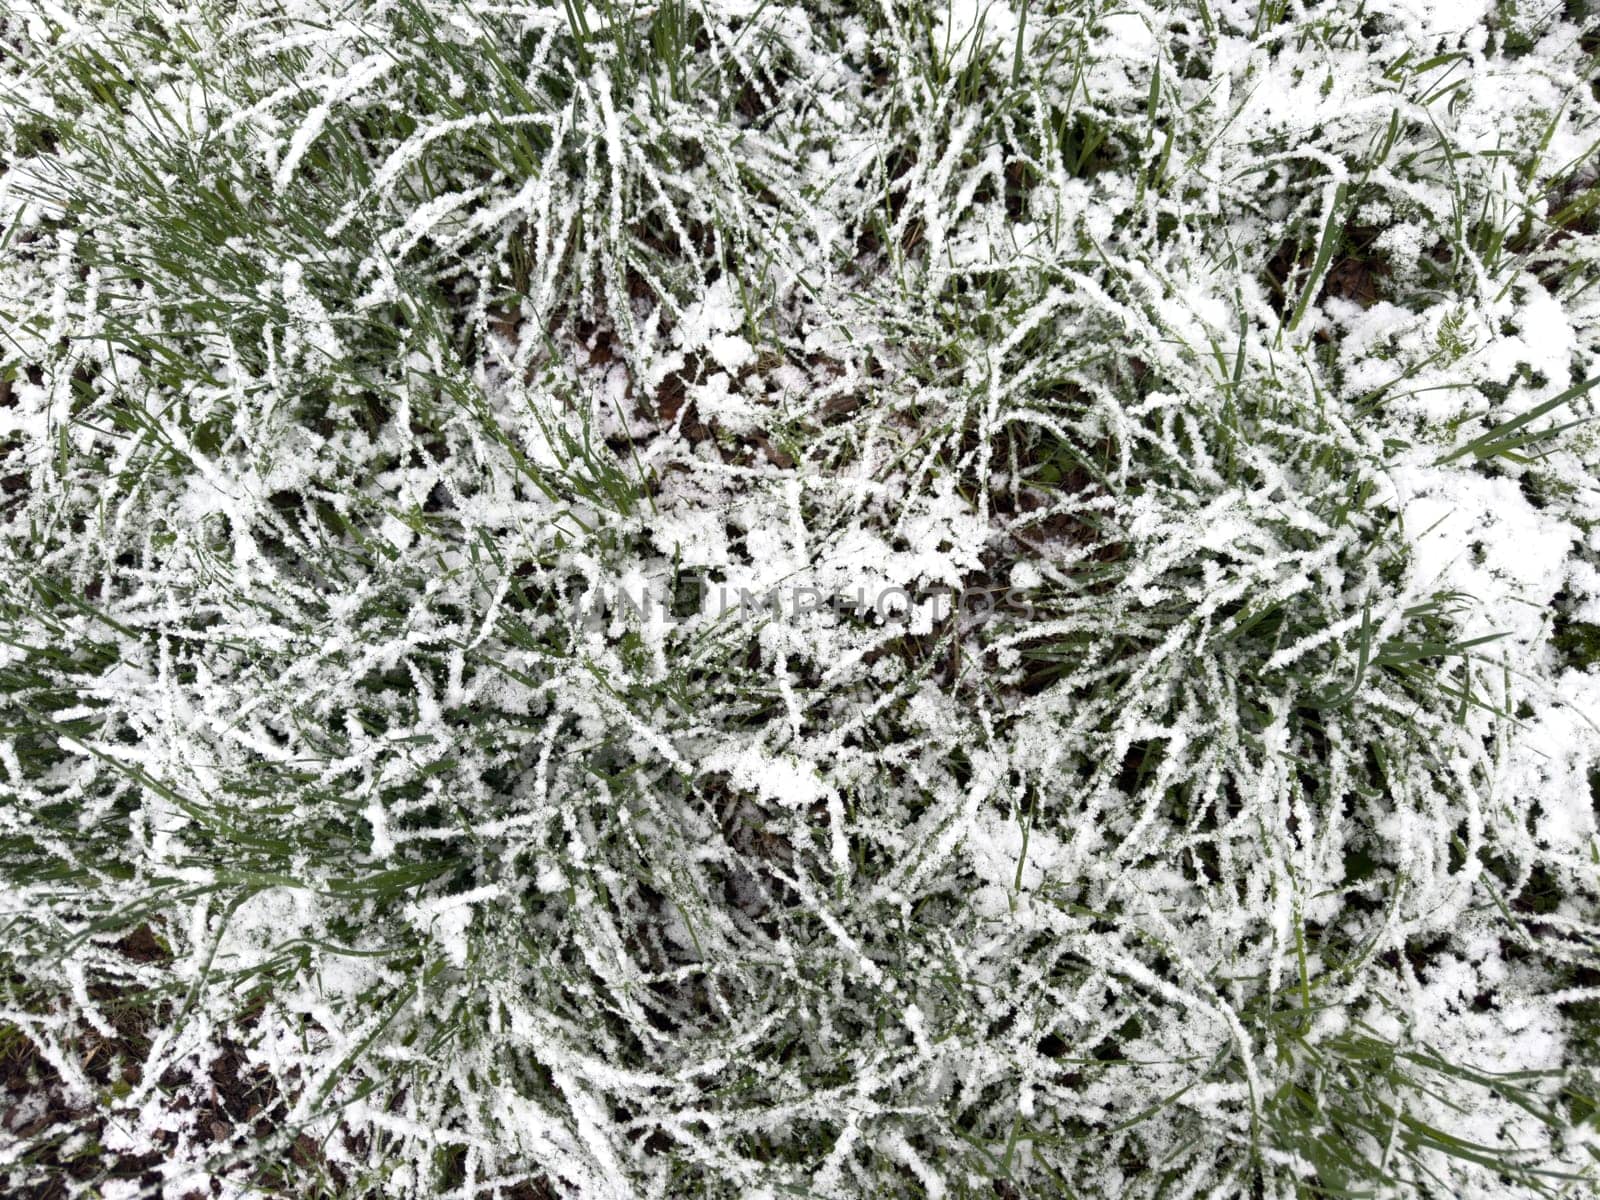 white snow lies on green grass by Igorsmirnof